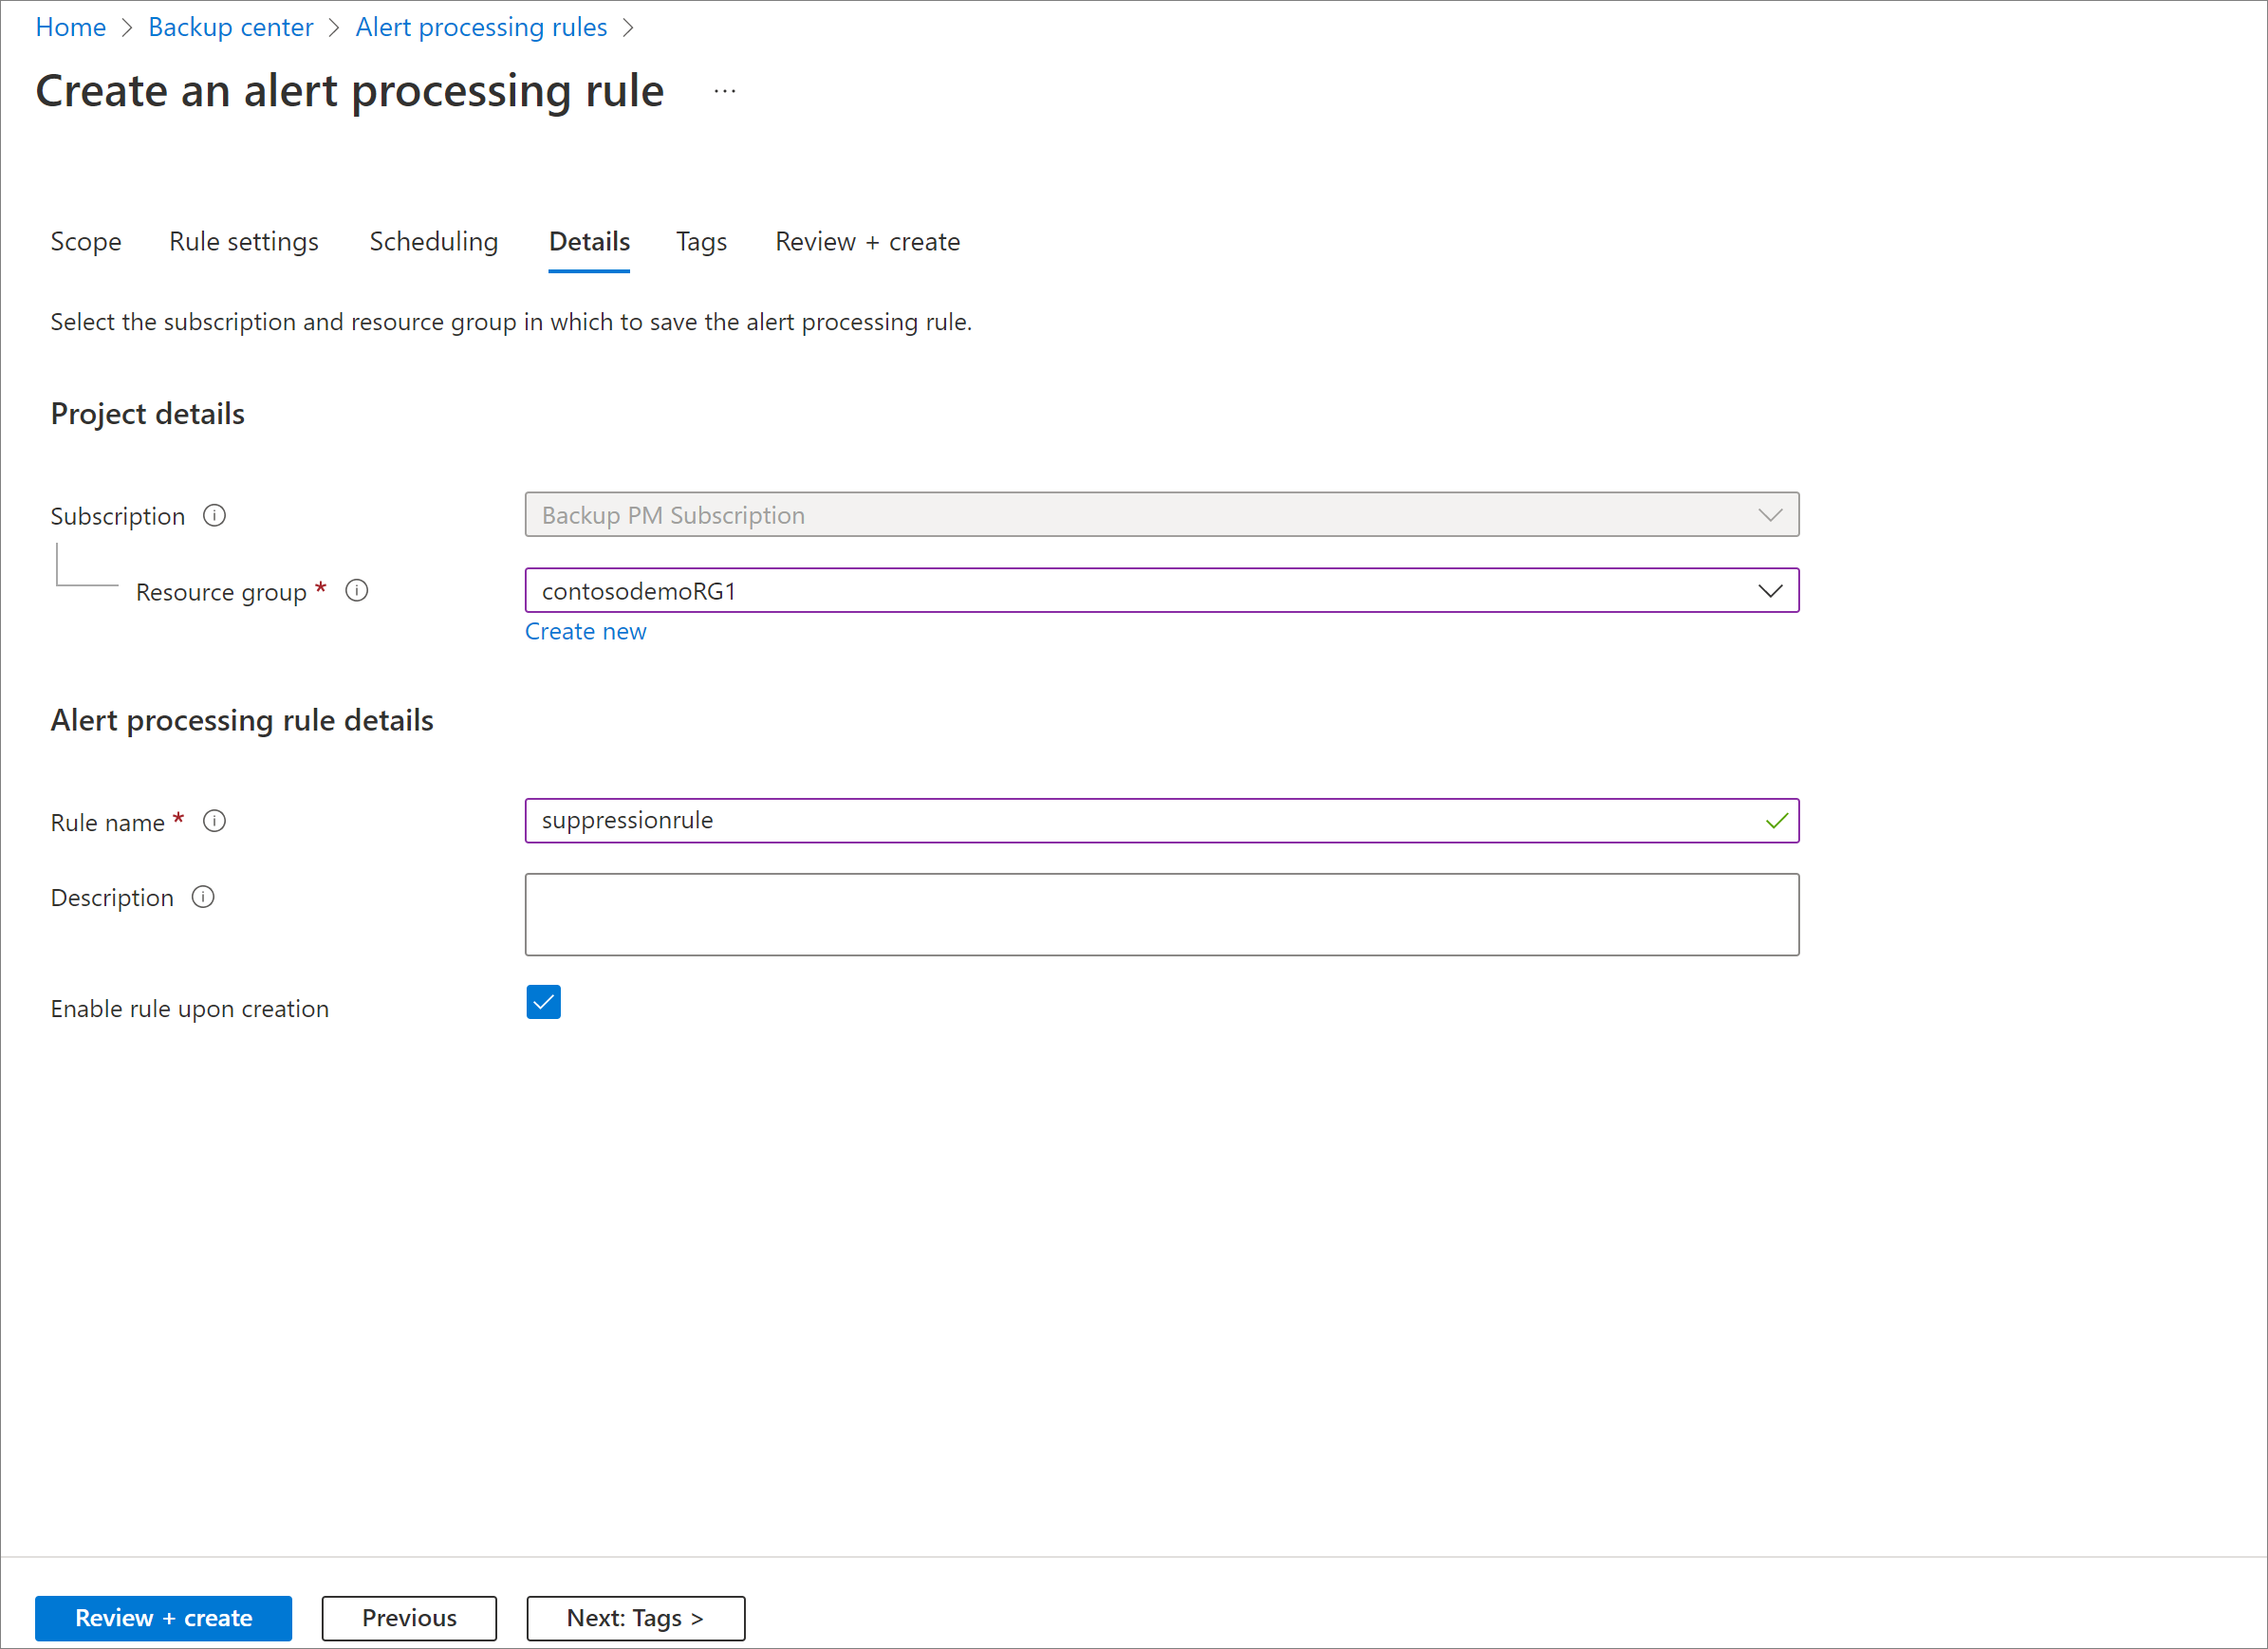 Screenshot showing alert processing rules details.